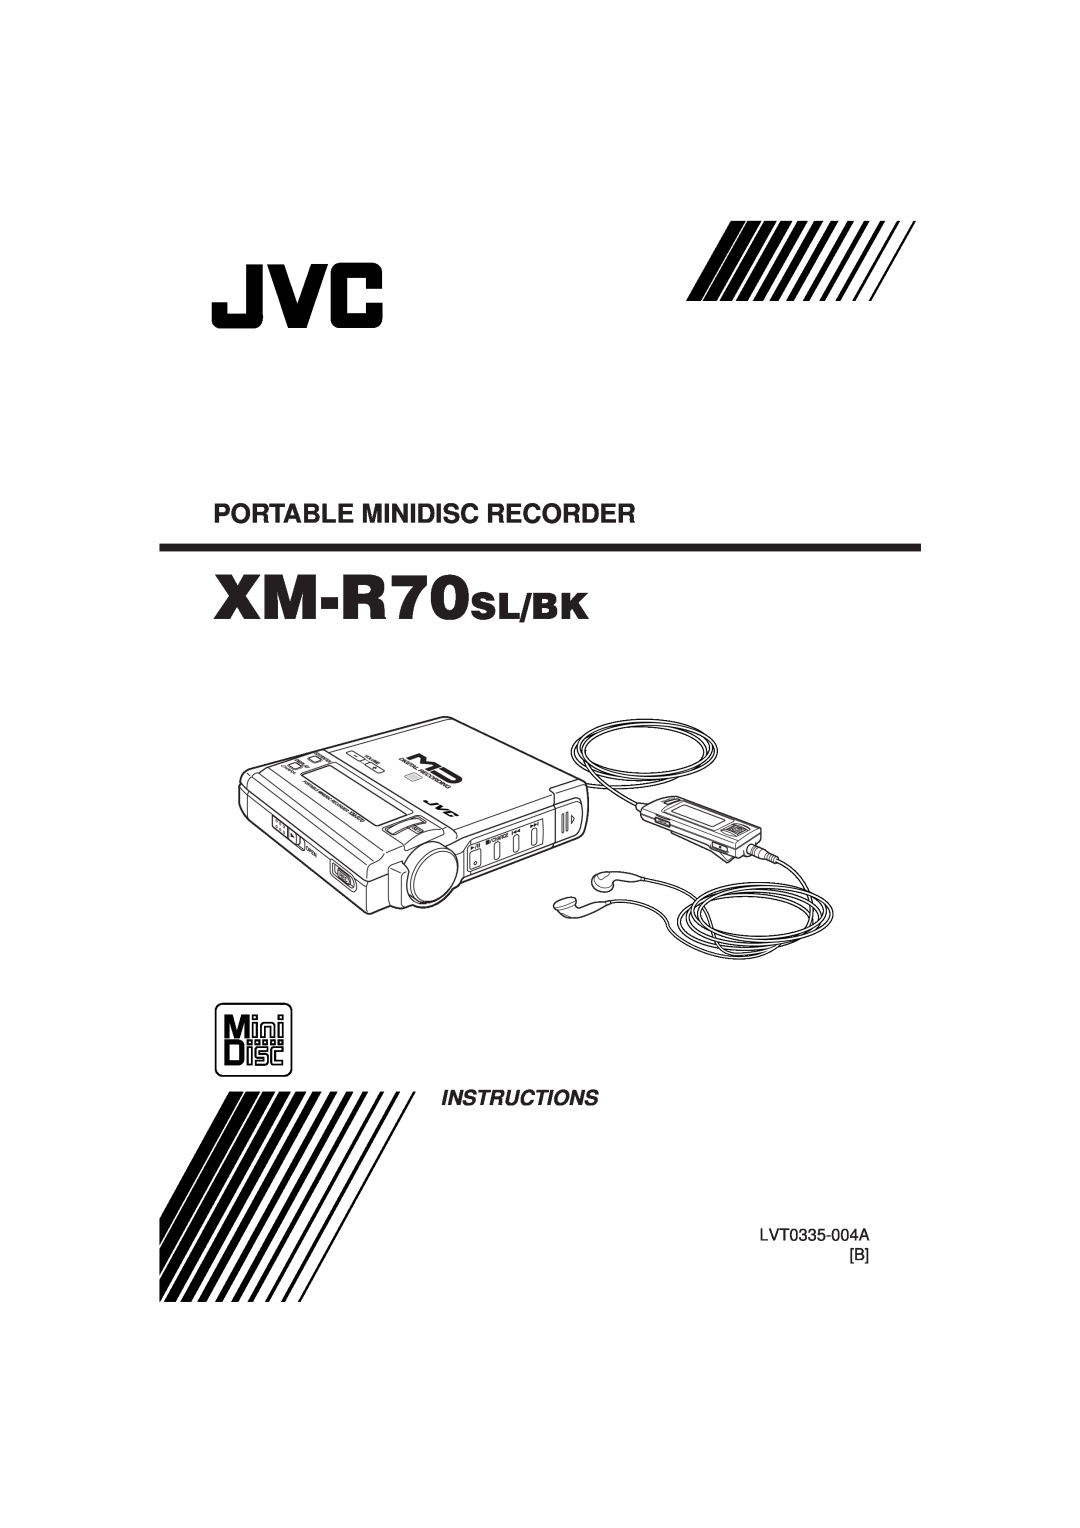 JVC manual XM-R70SL/BK, Portable Minidisc Recorder, Instructions, LVT0335-004AB 